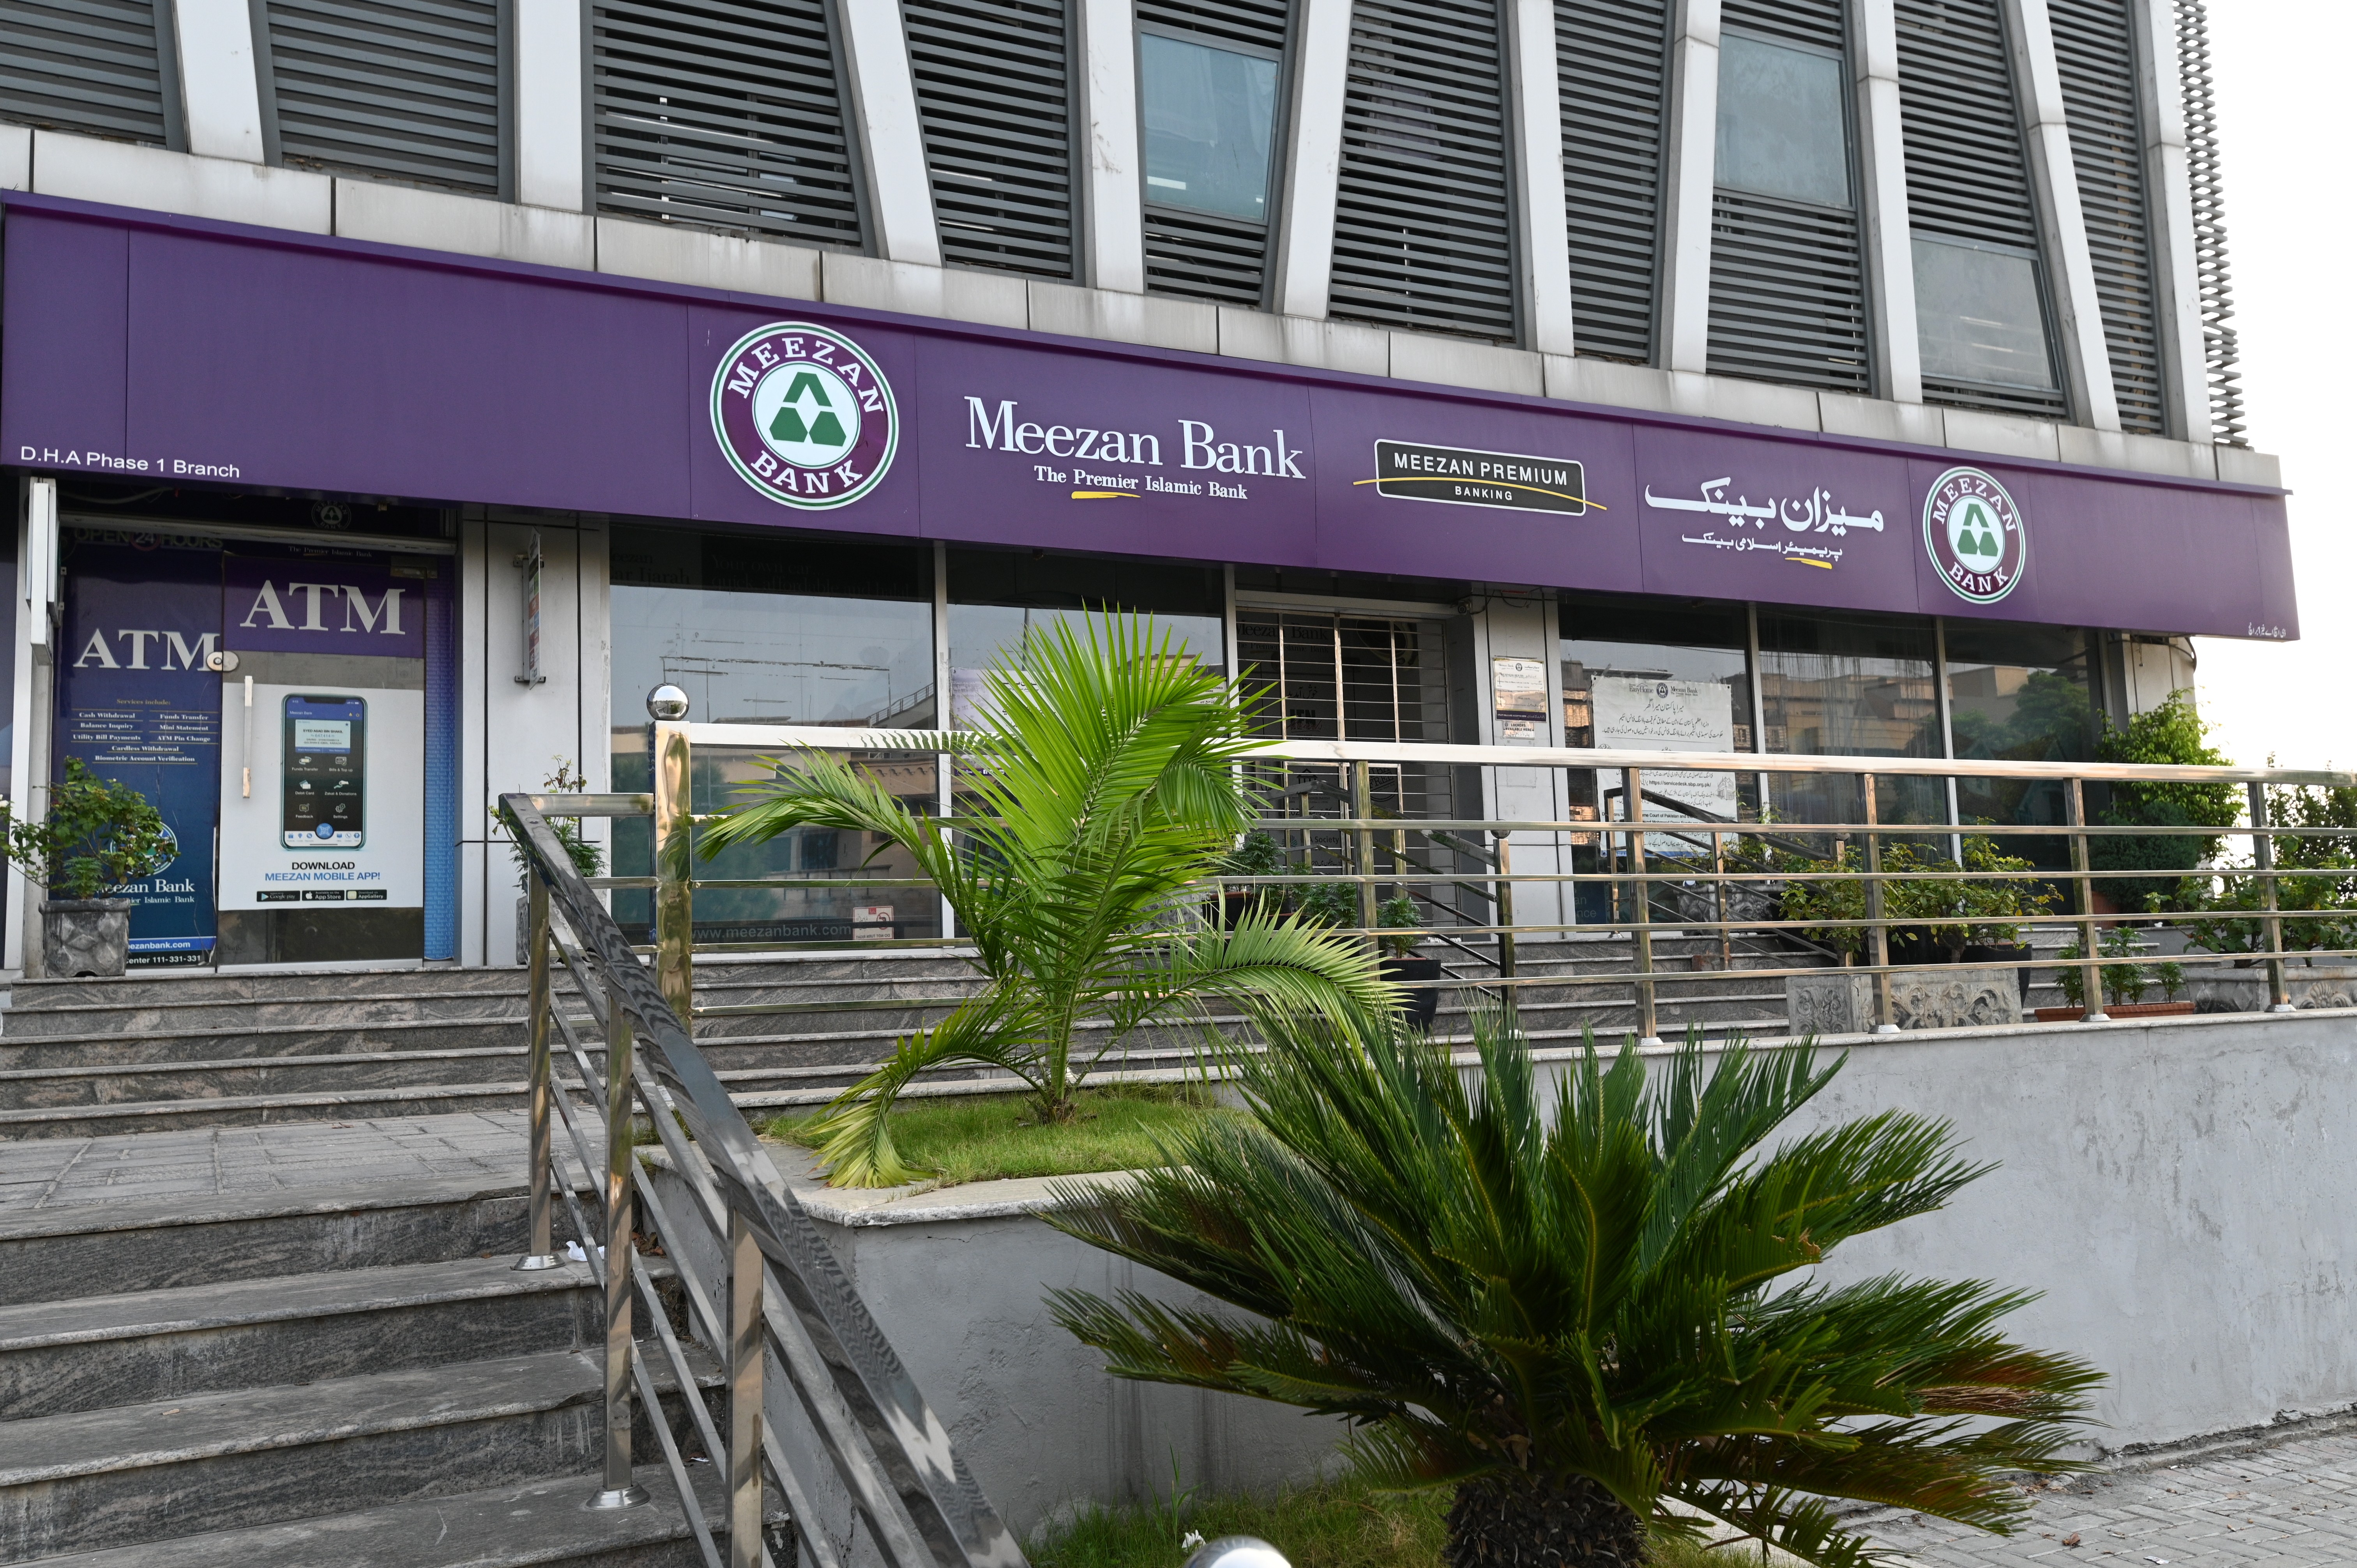 Meezan Bank, The premier Islamic Bank, DHA phase - I branch.